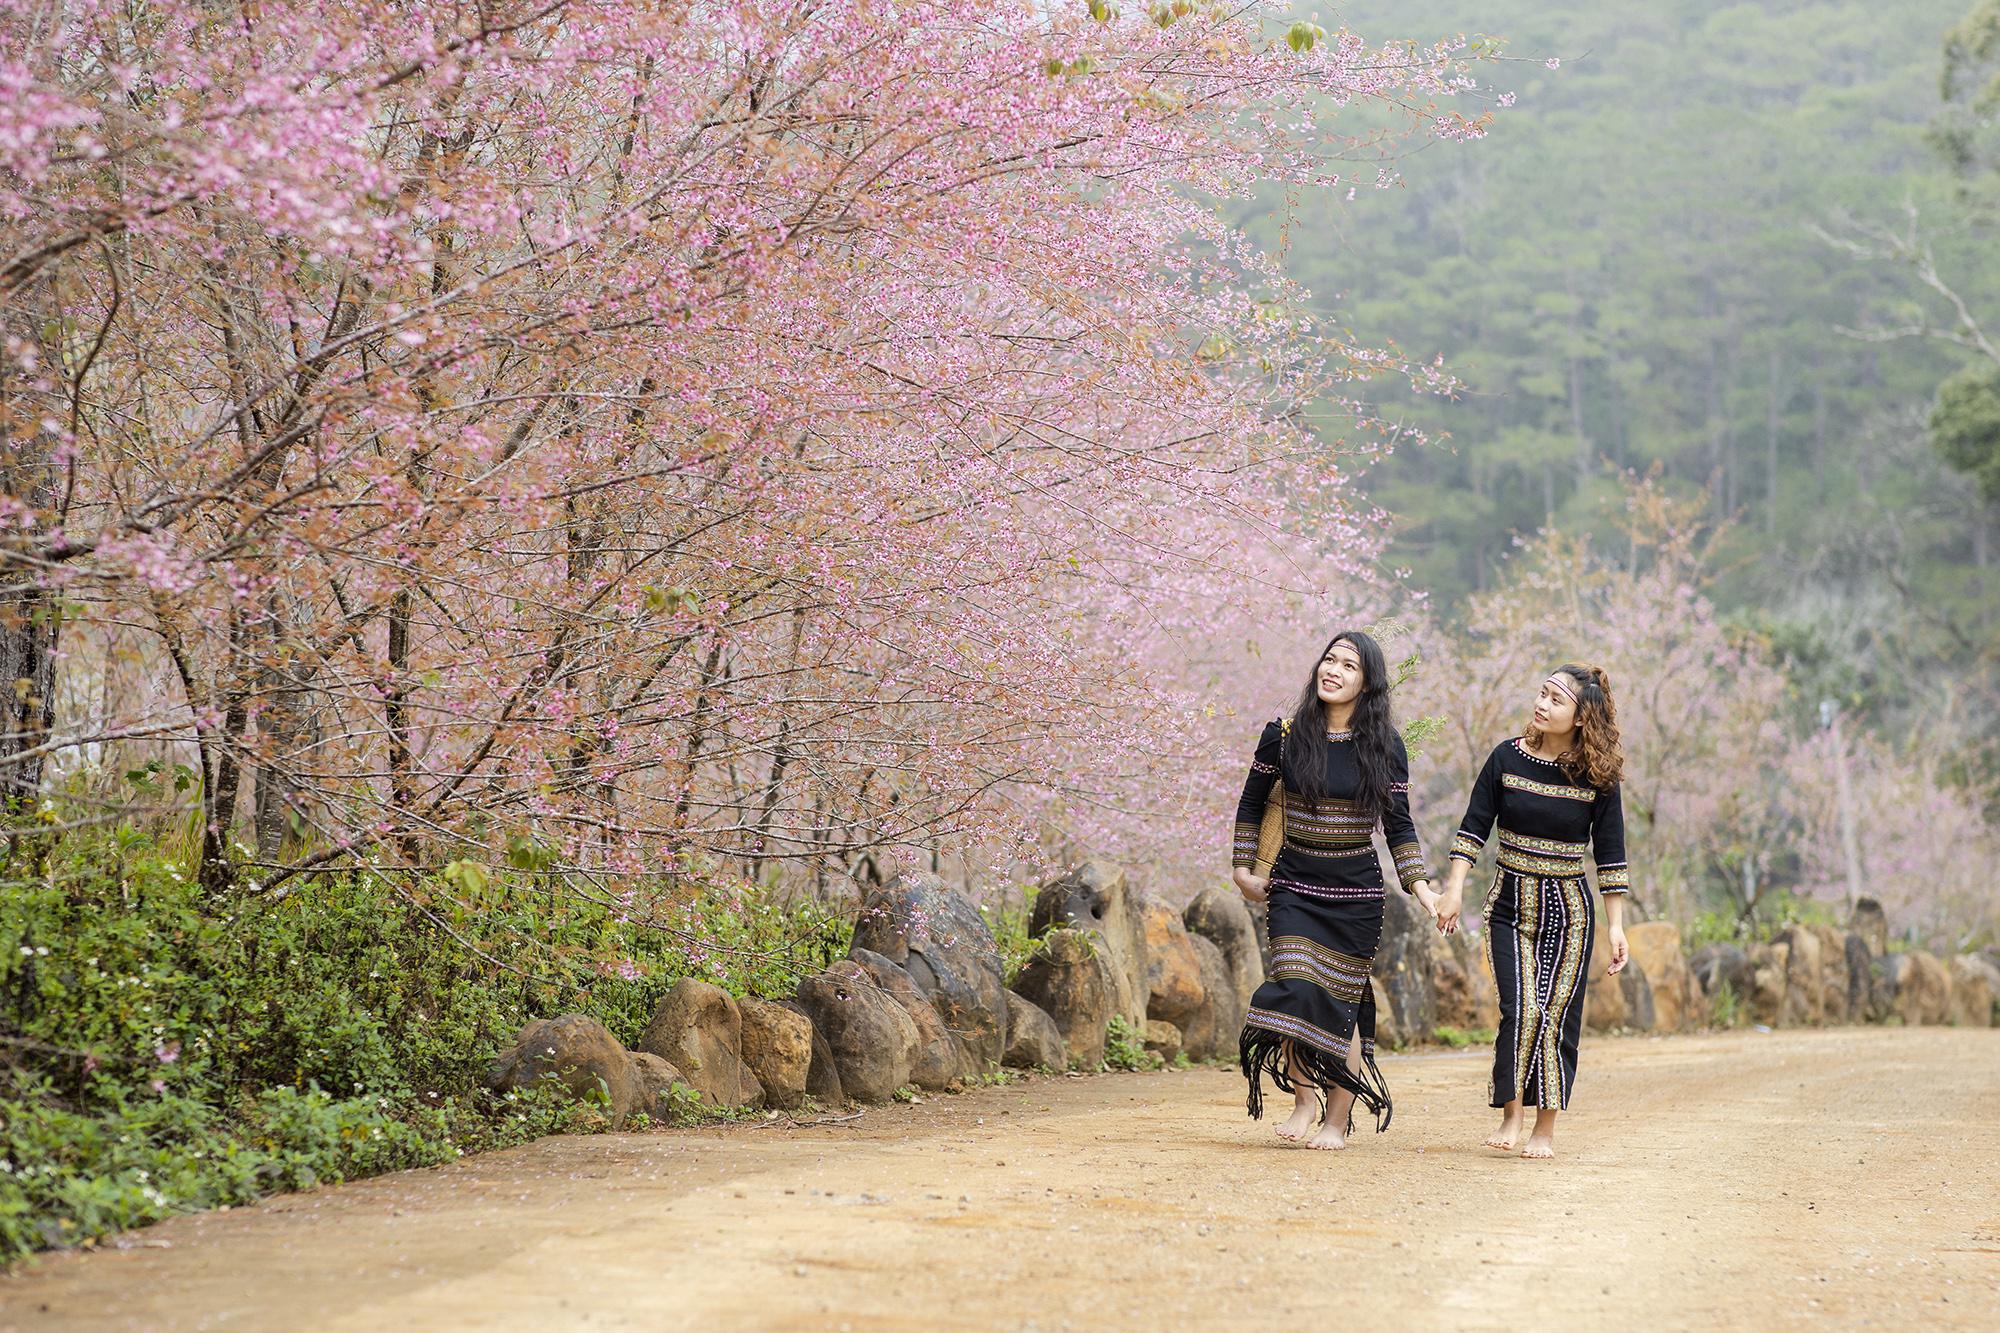 Photo Gallery: Admiring cherry blossoms in Măng Đen